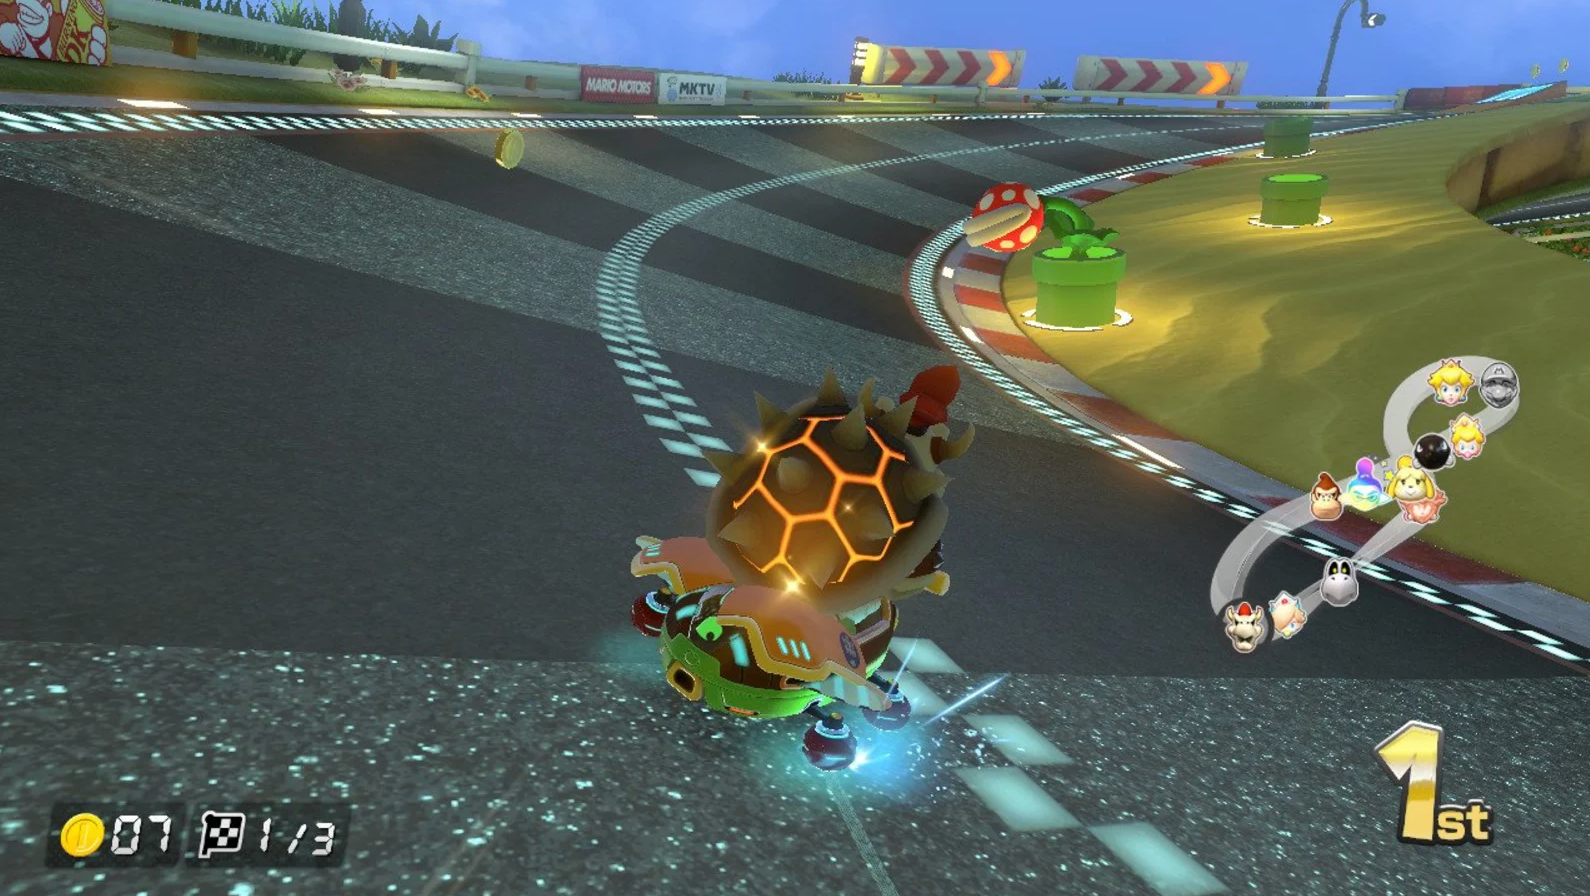 I Found A Family In A Mario Kart Tournament